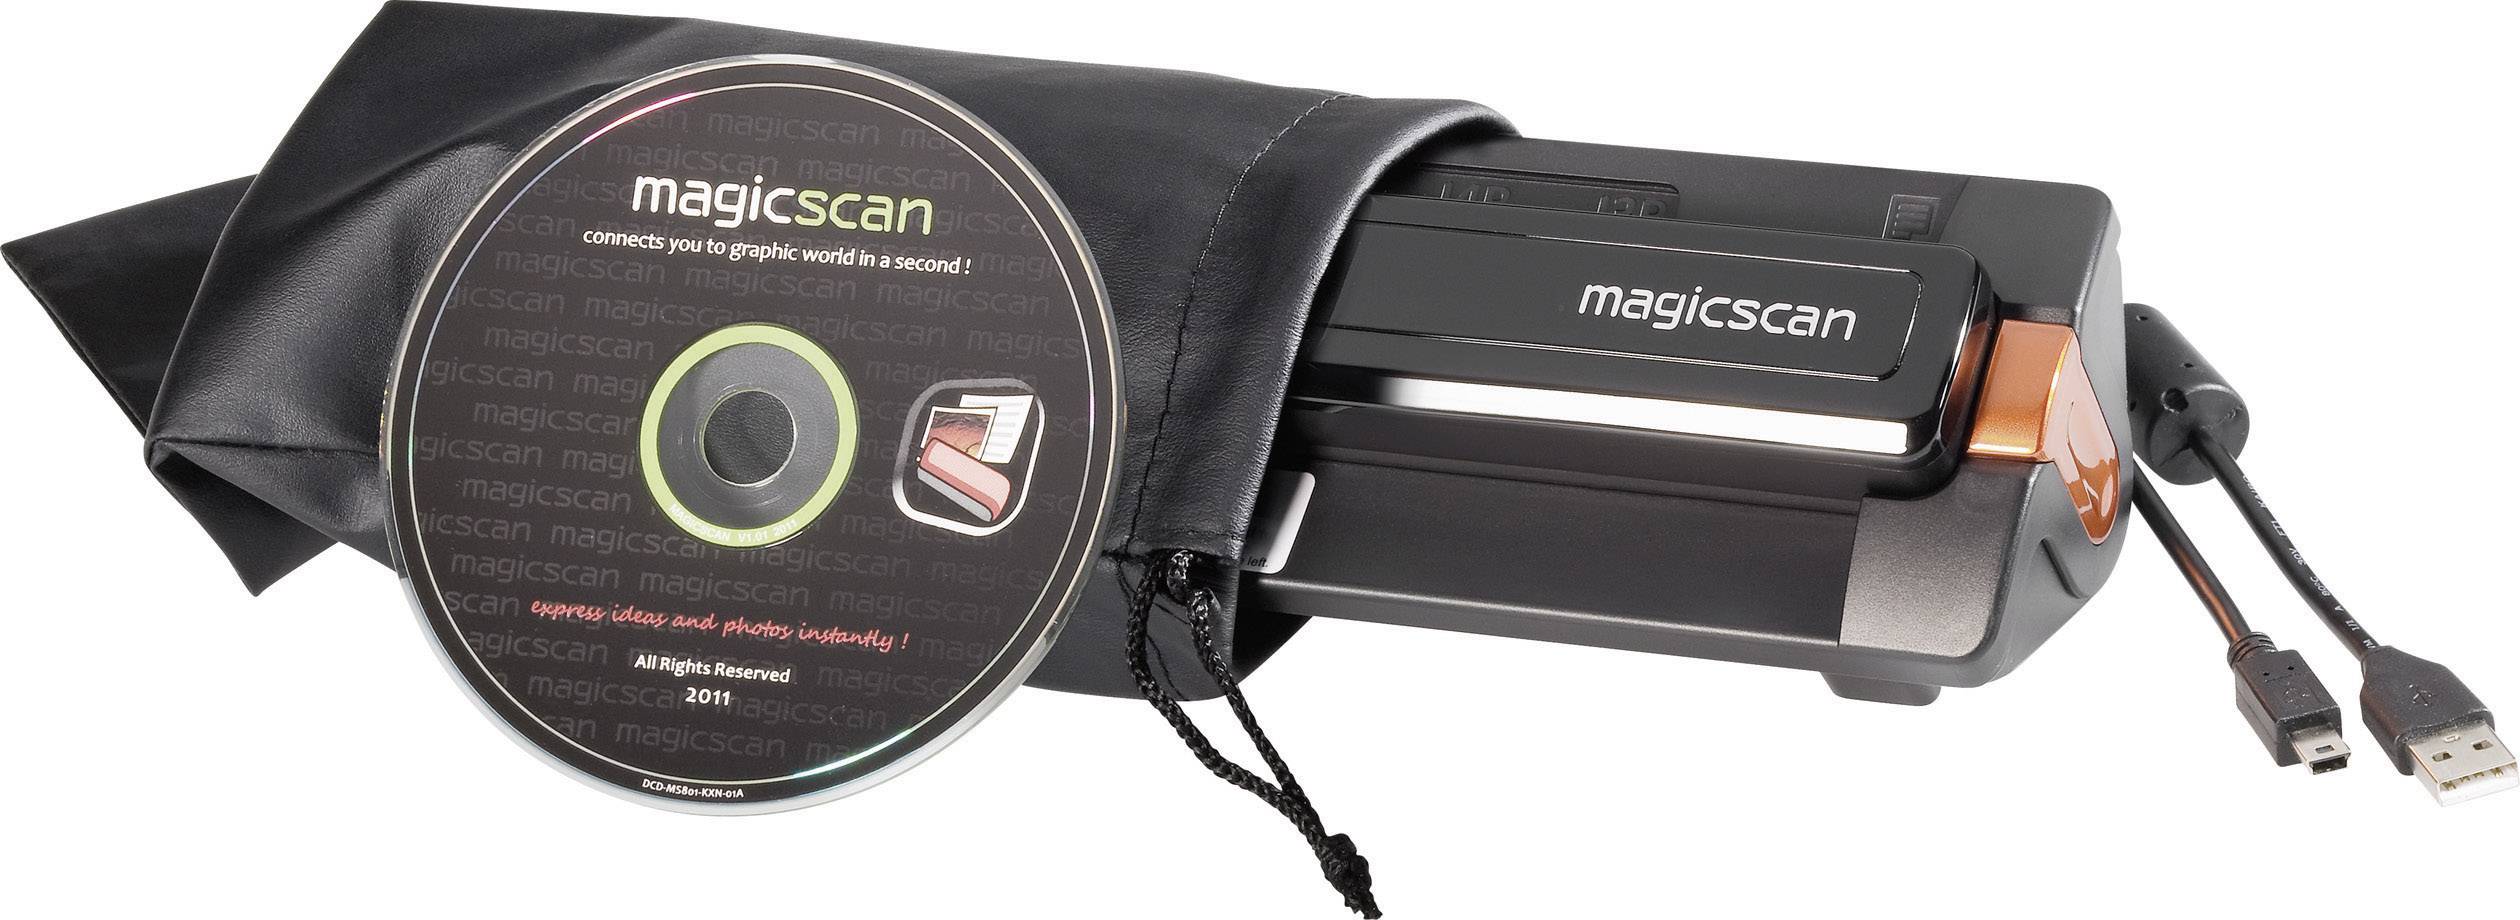 Magicscan portable scanner driver download windows 7